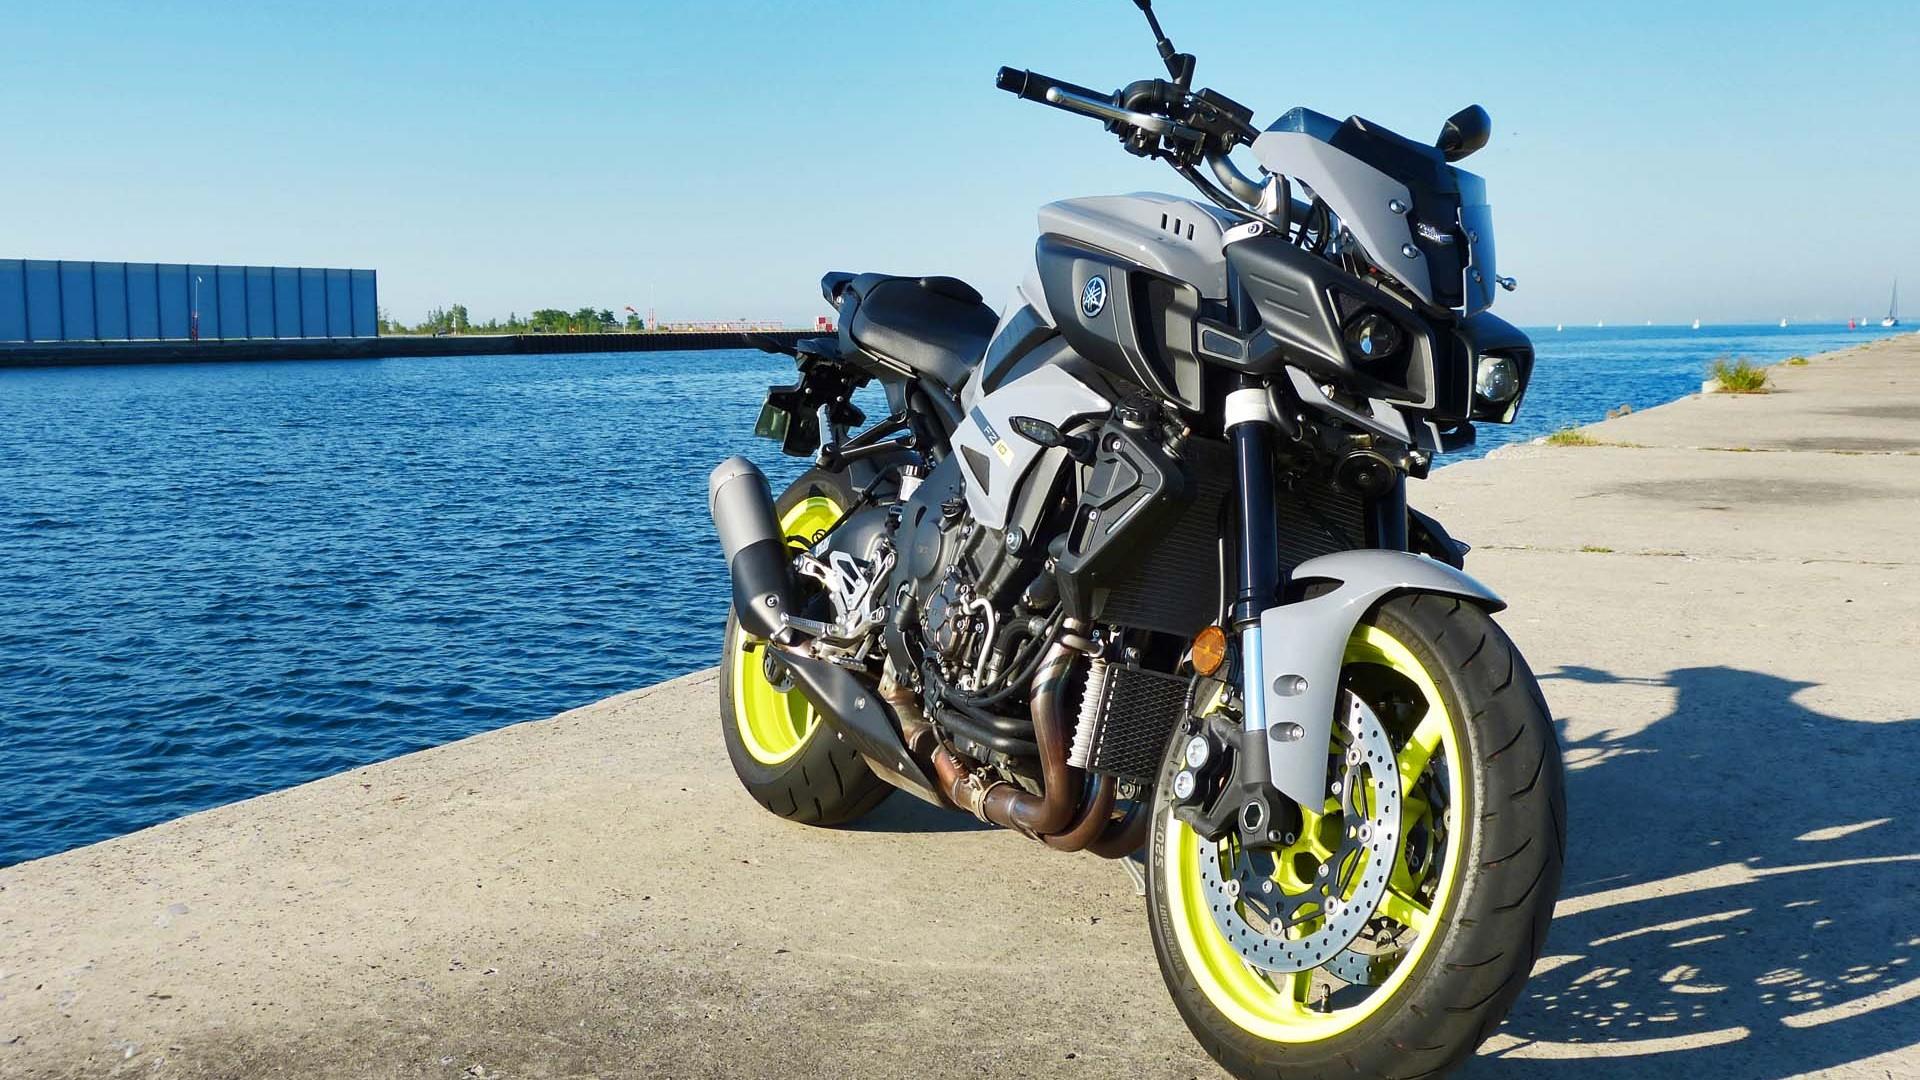 Тест-драйв мотоцикла Yamaha FZ8N